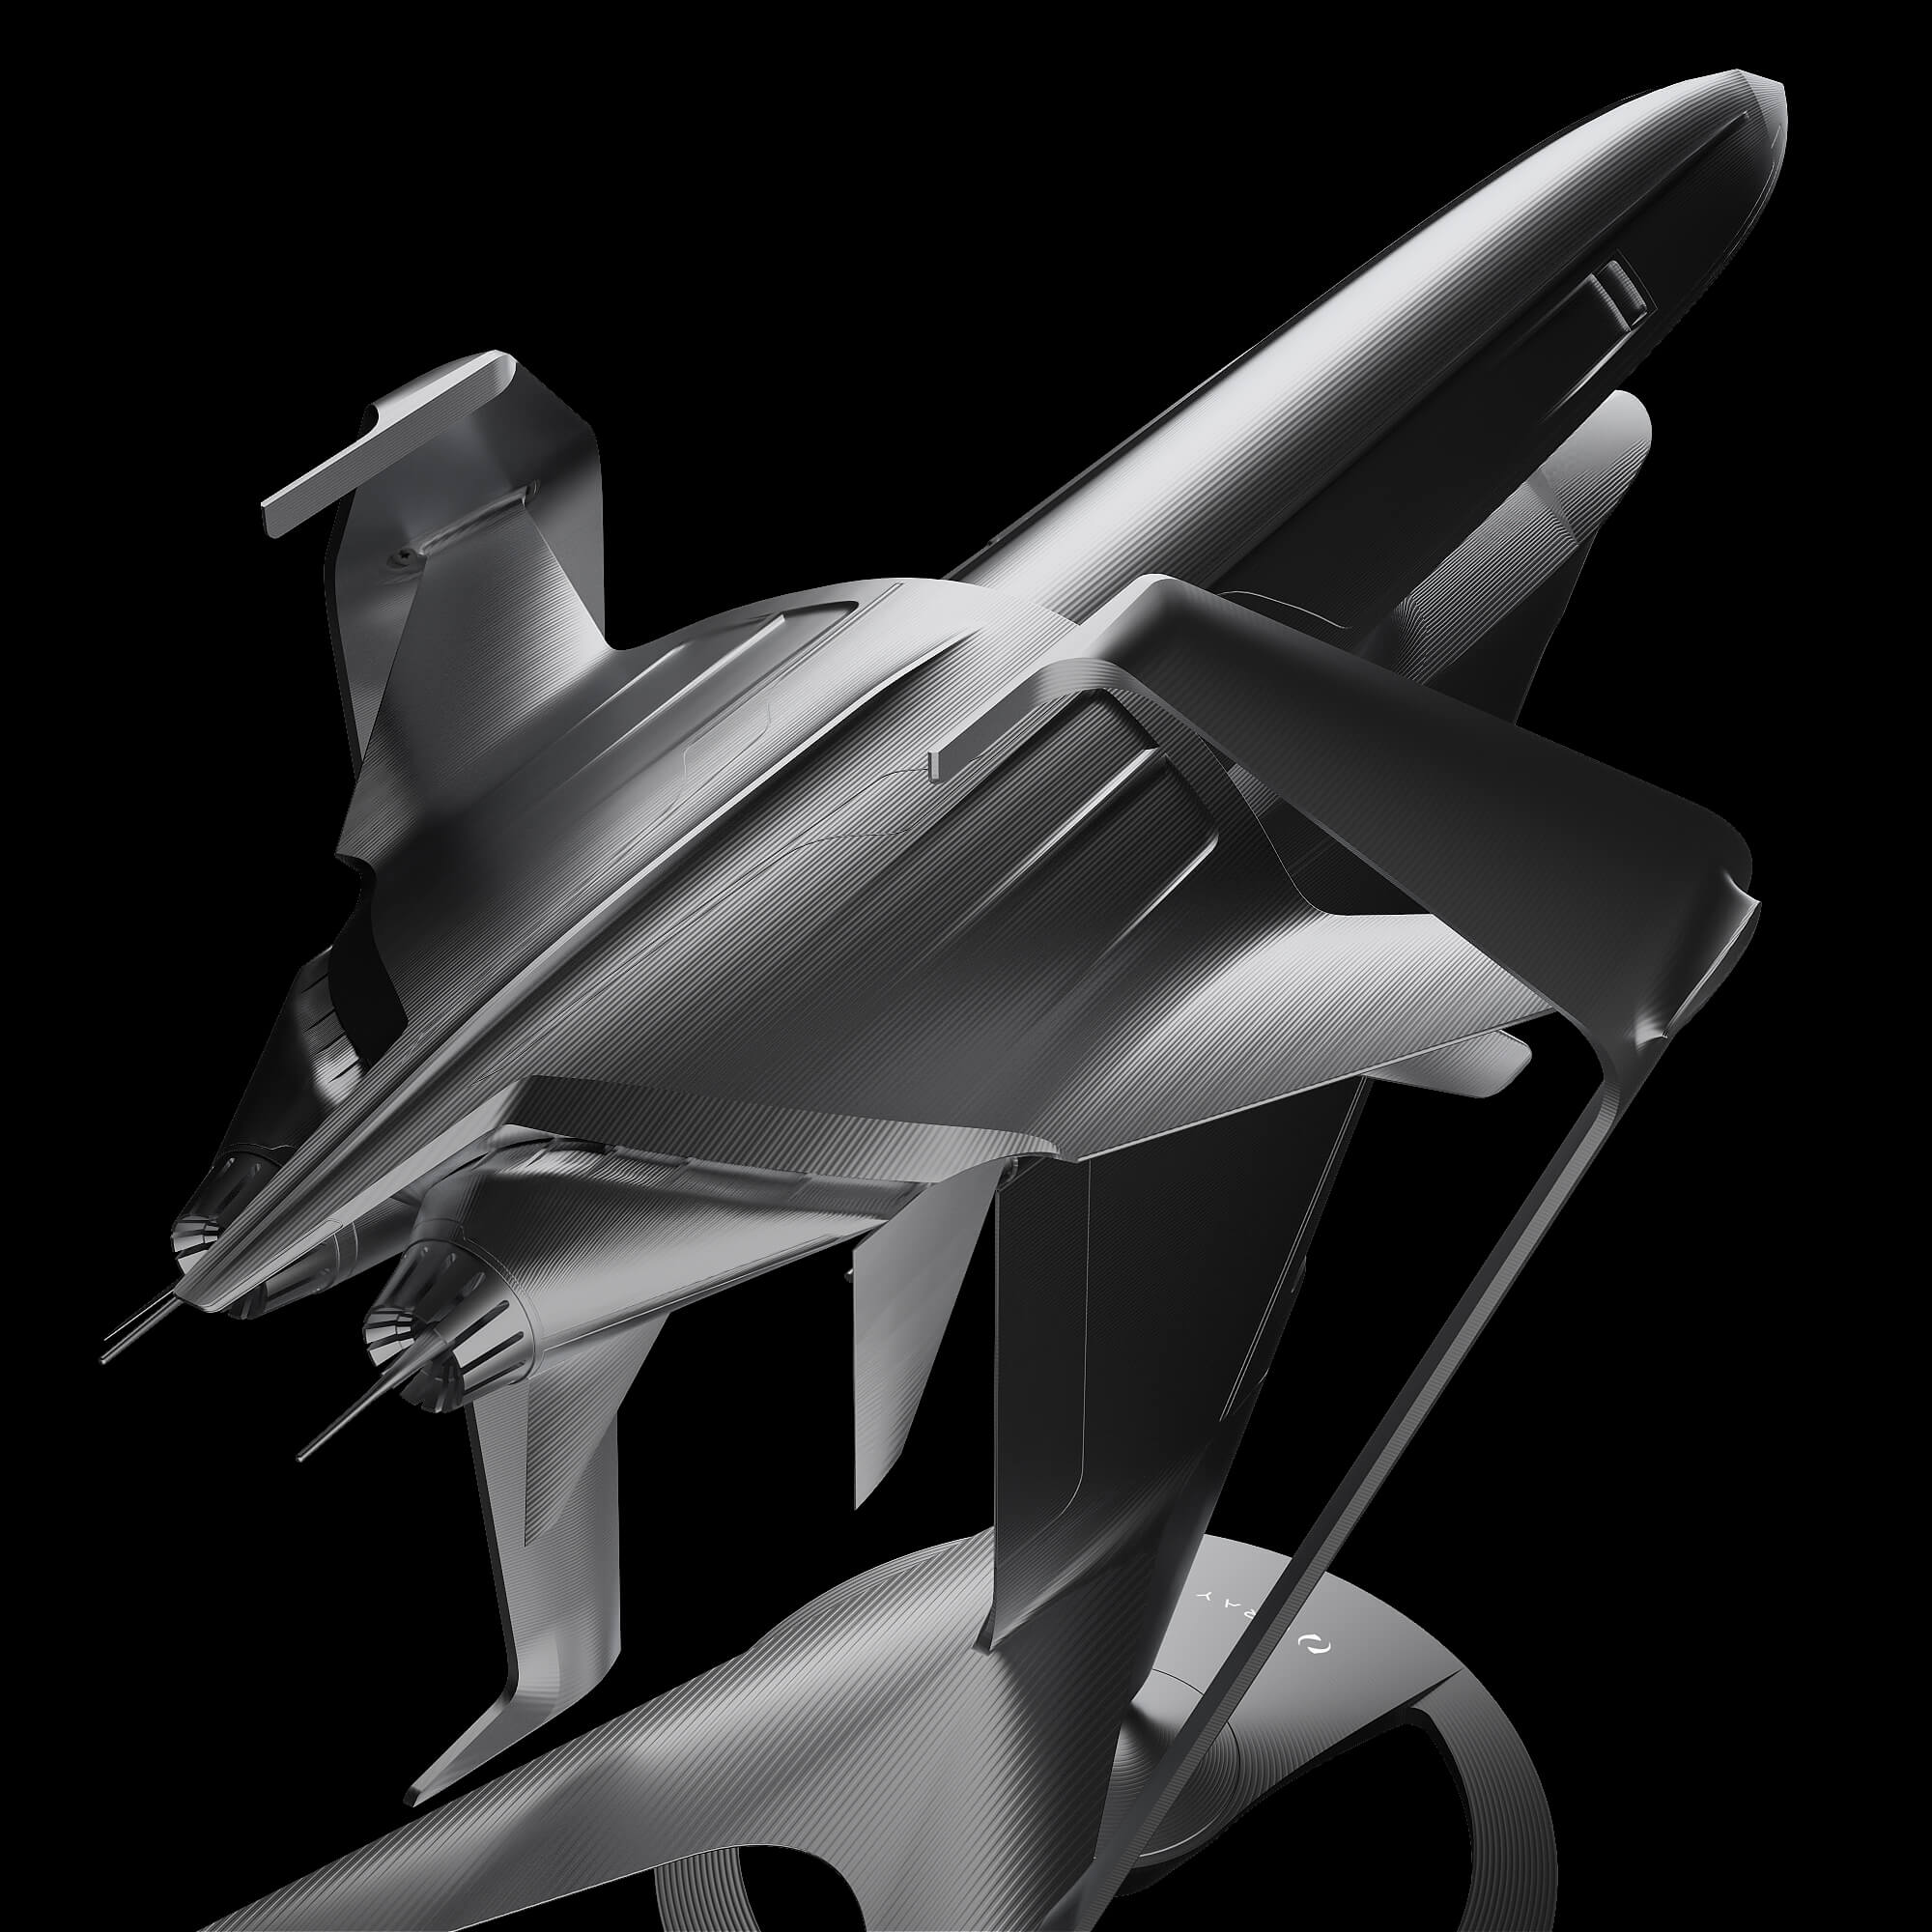 graycraft1-1 space gray aluminium spaceship art sculpture